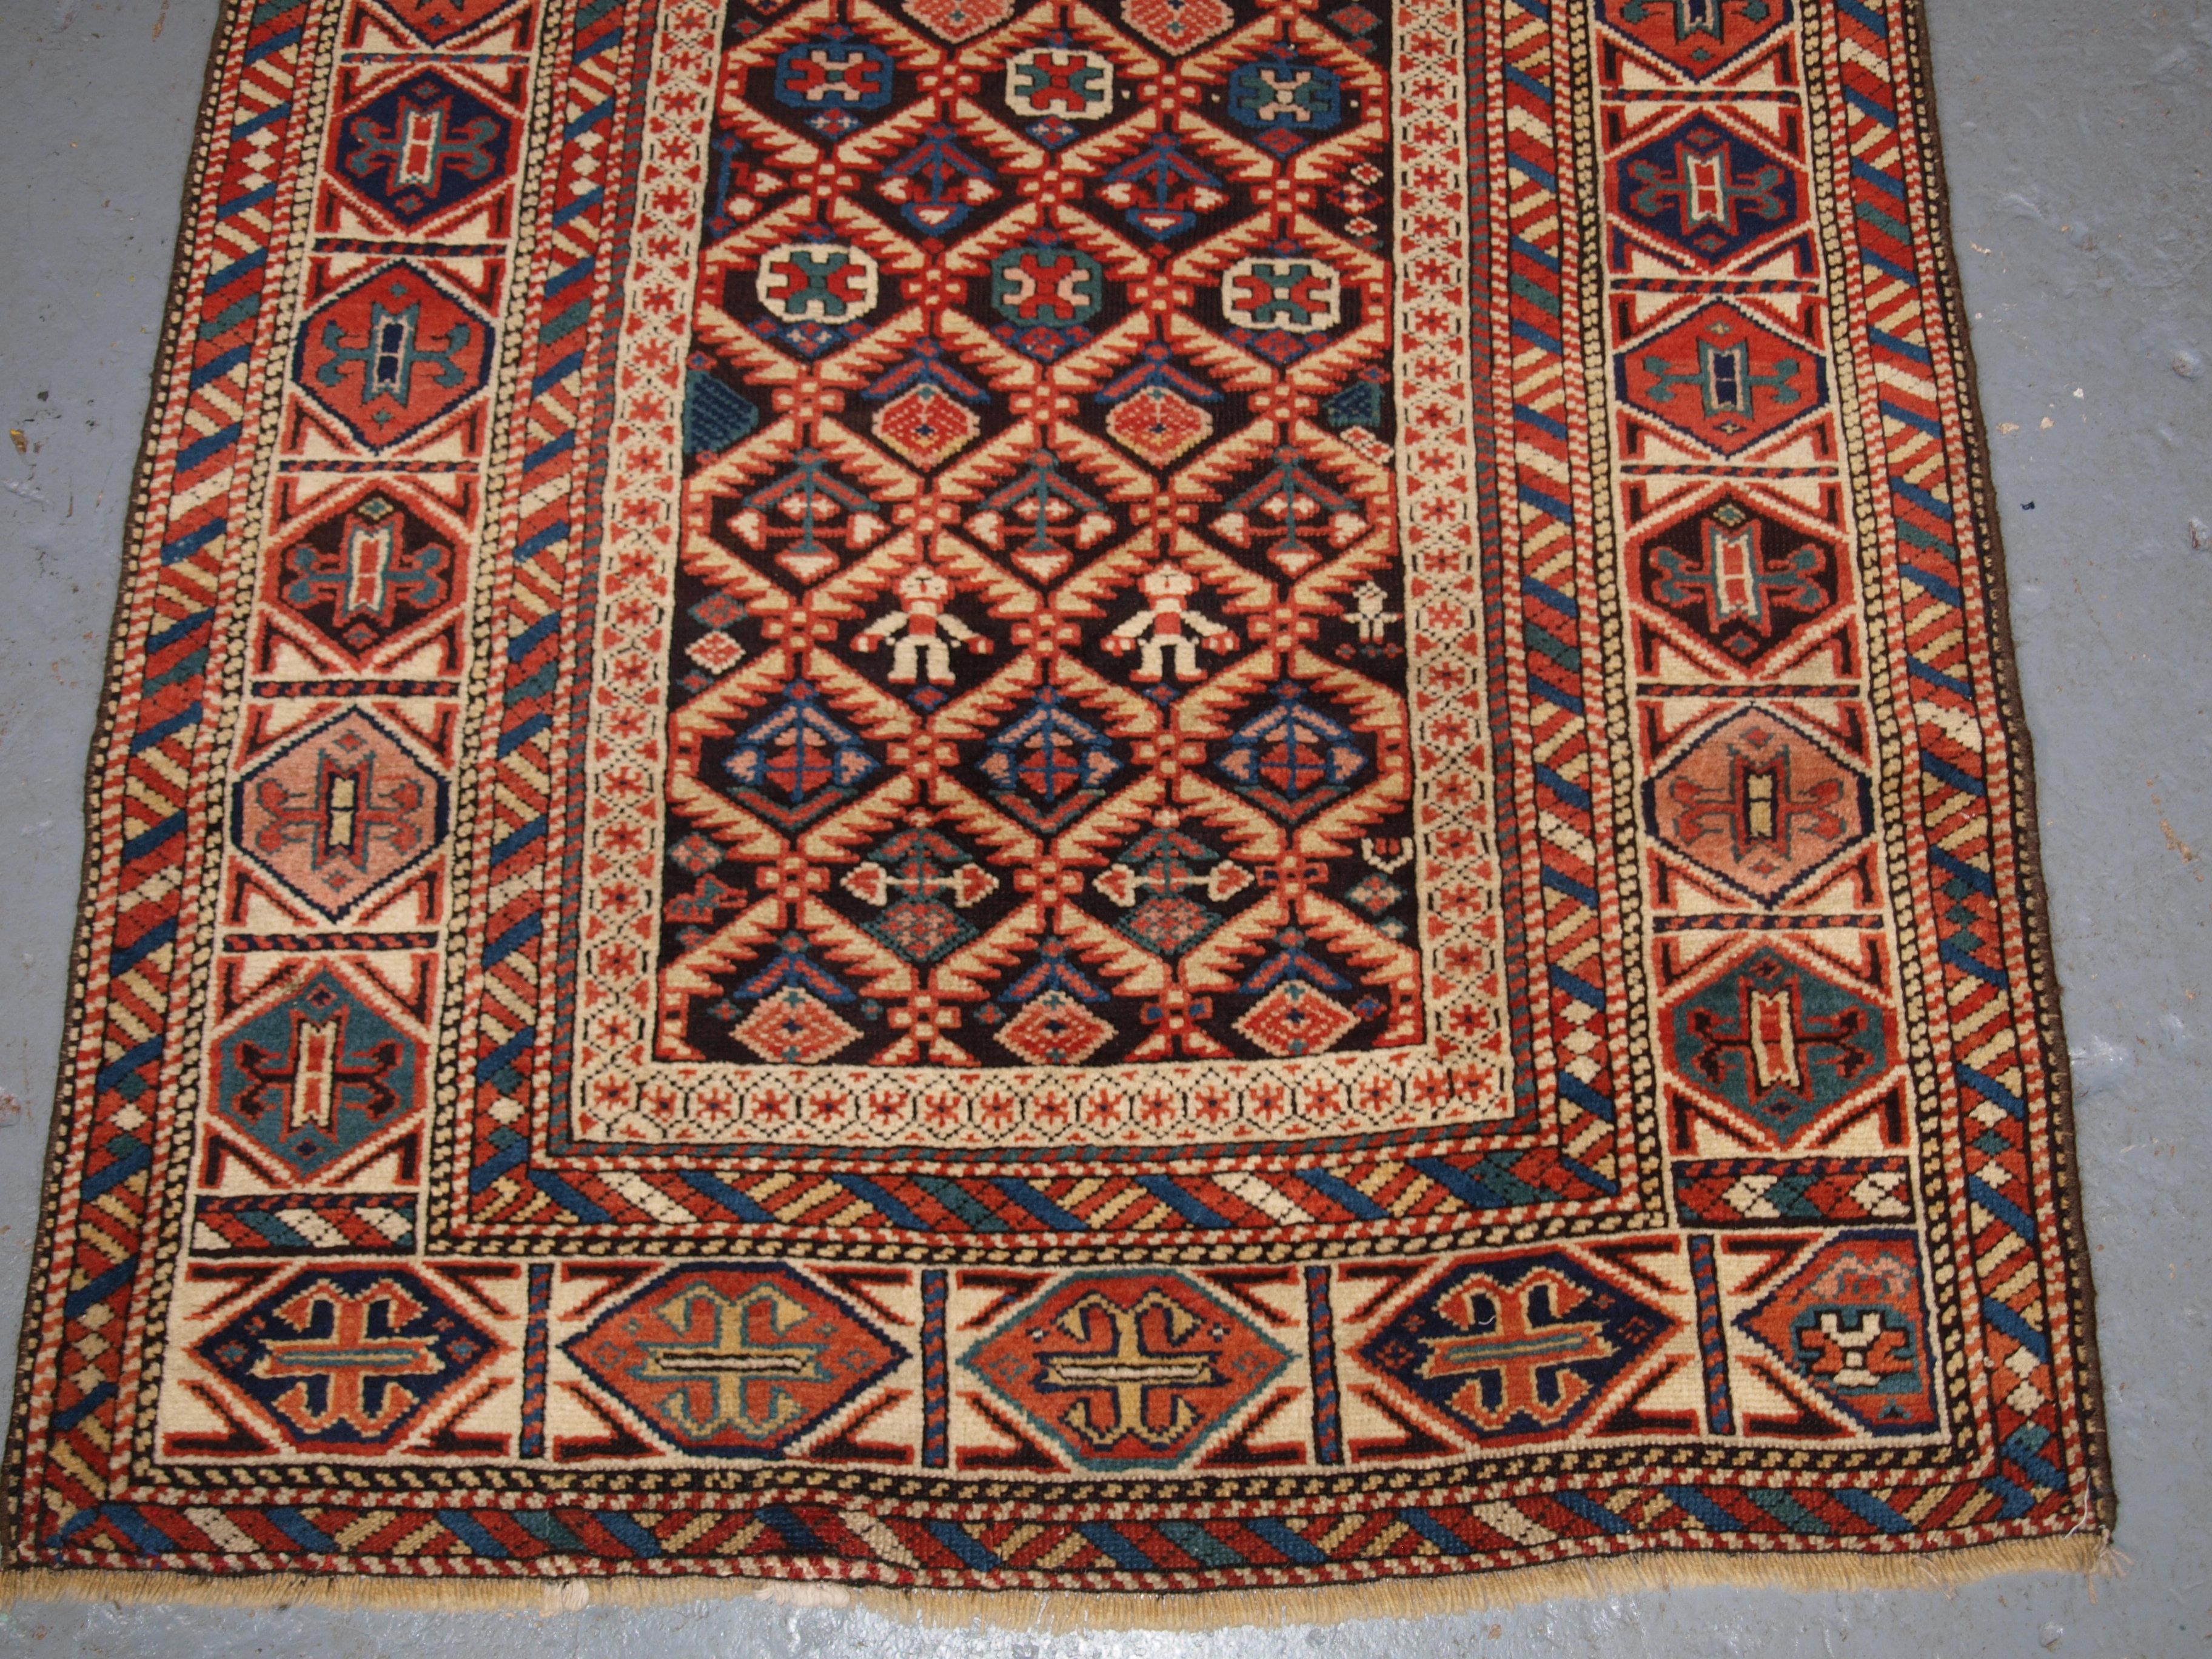 19th Century Antique Caucasian Dagestan Rug with Lattice Design on Dark Charcoal Ground